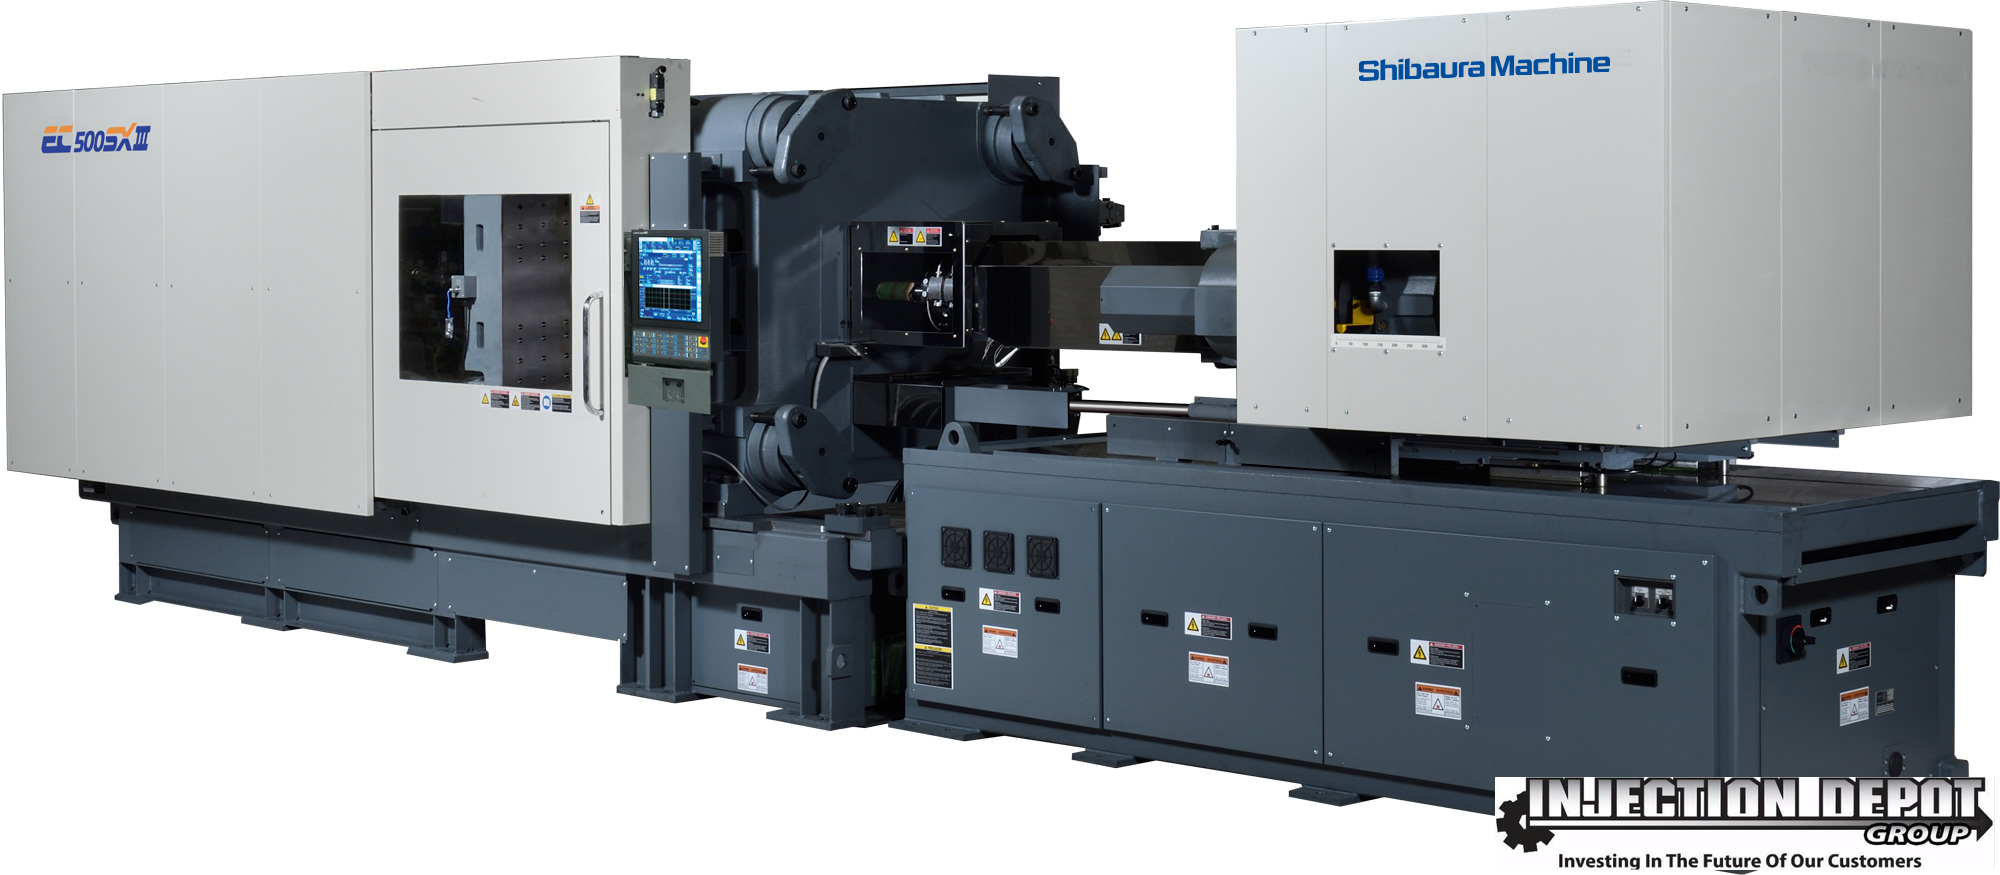 Shibaura Machine EC500SXIIIV70-i36B Horizontal Injection Moulding Machines | INJECTION DEPOT GROUP